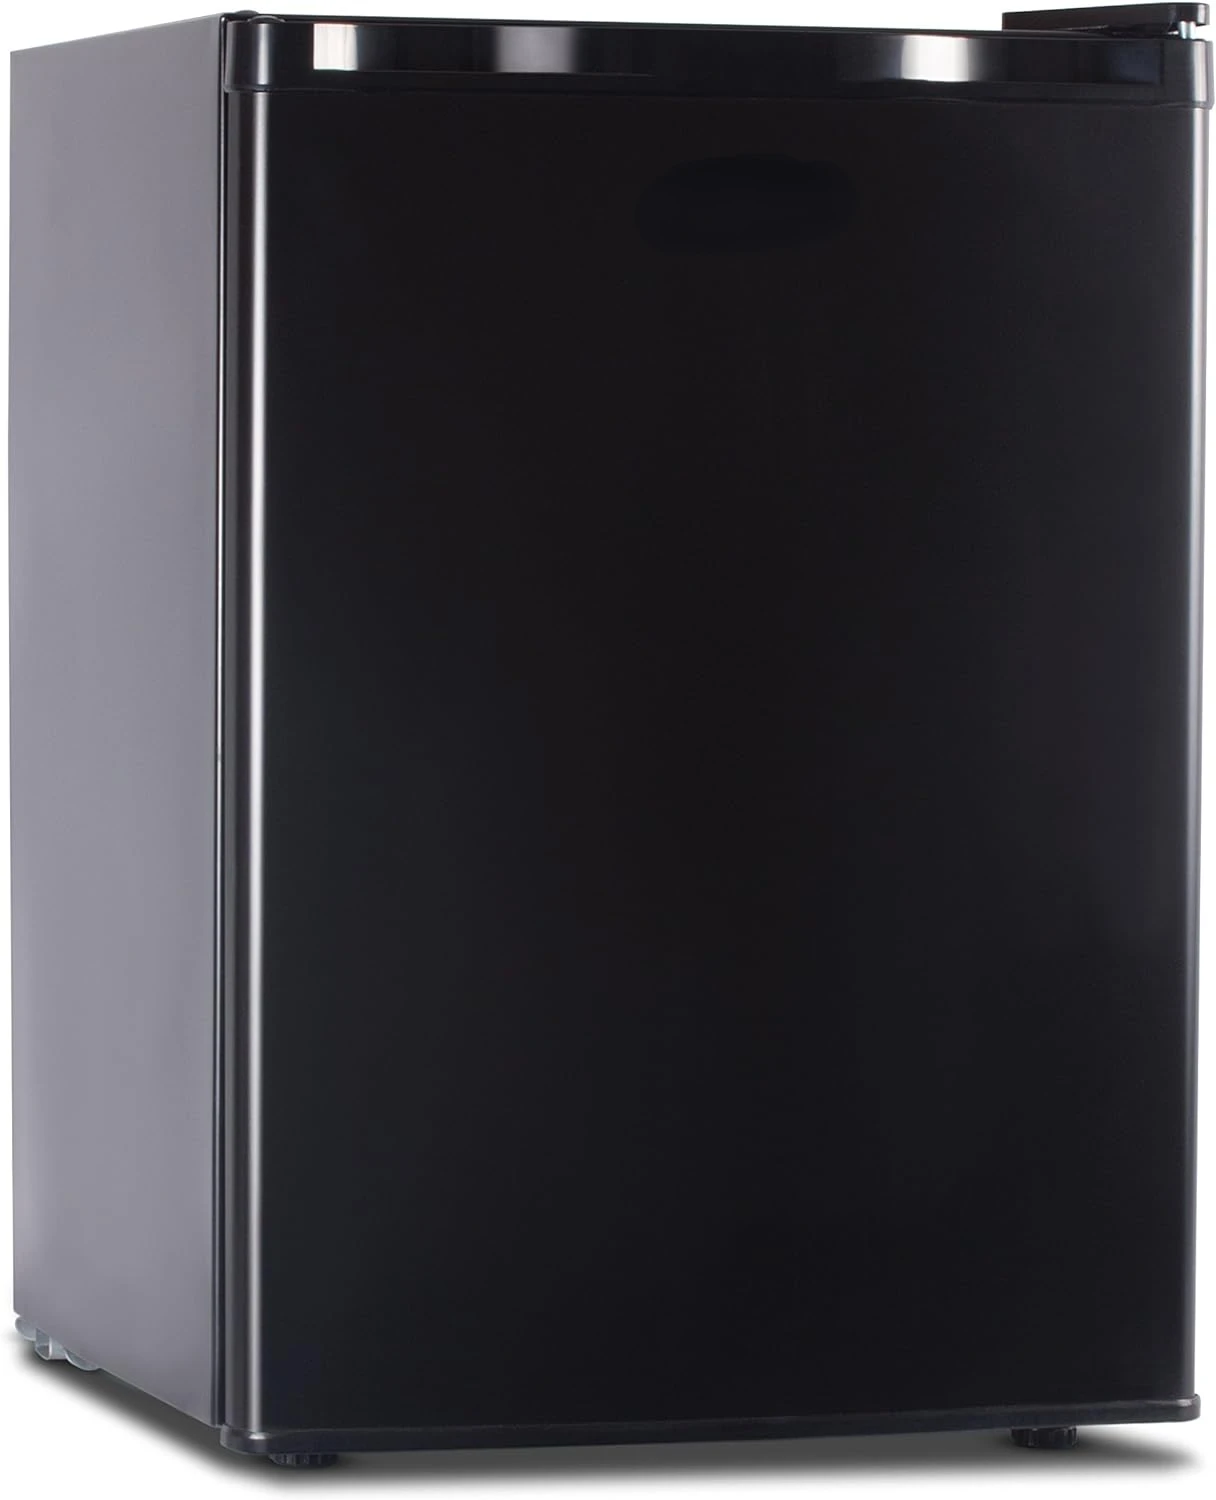 

Cool CCR26B Compact Single Door Refrigerator and Freezer, 2.6 Cu. Ft. Mini Fridge, Black